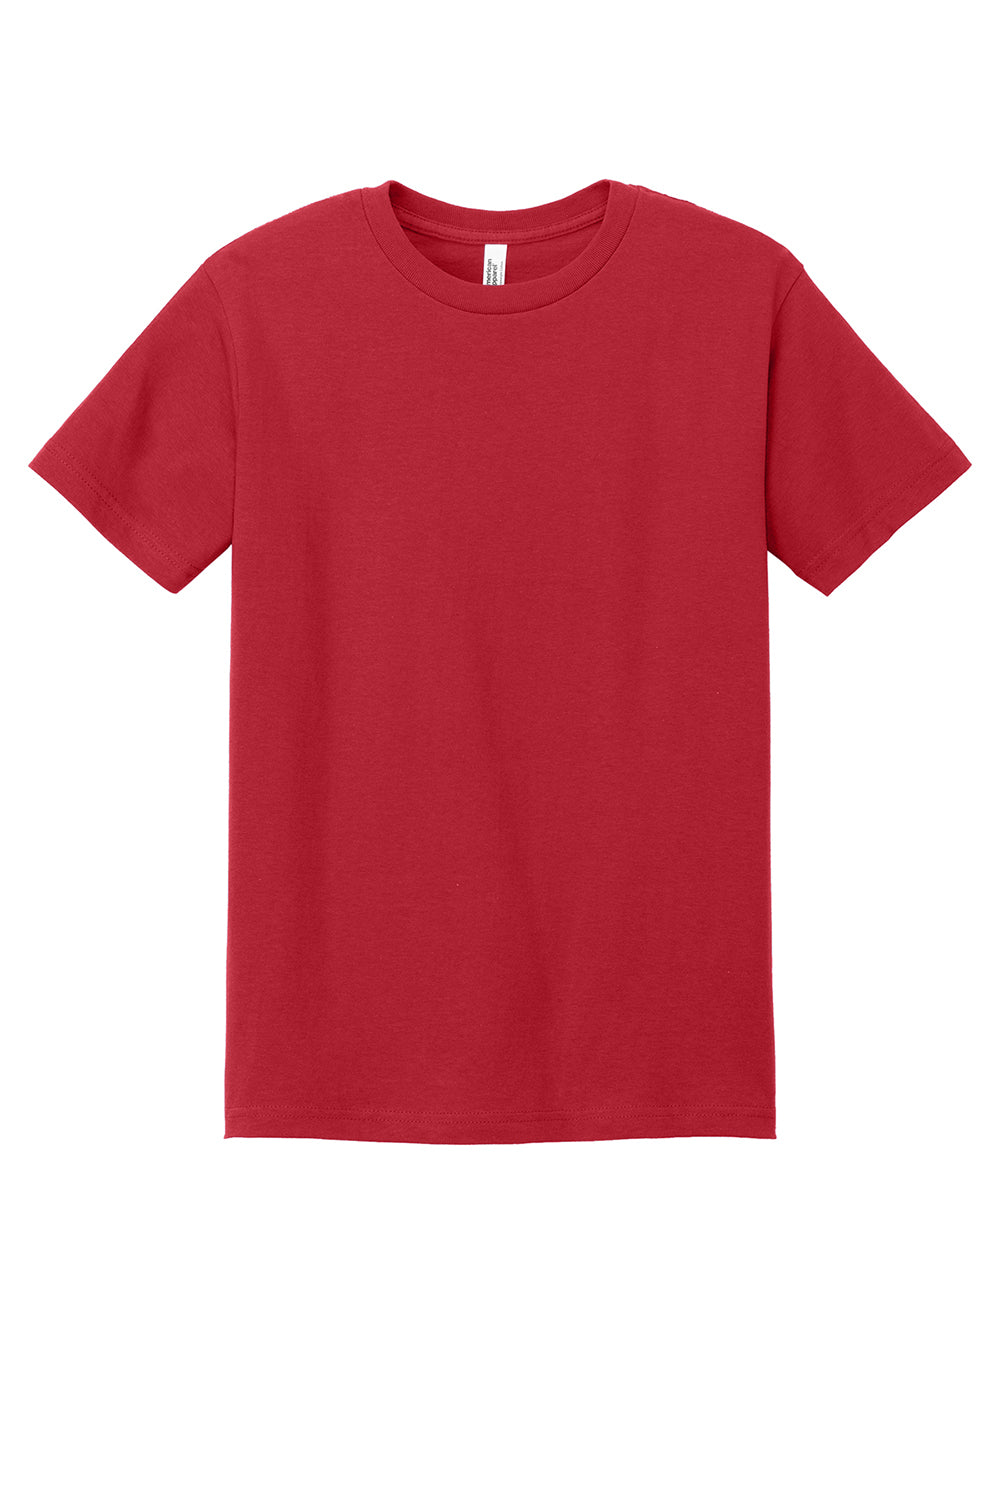 American Apparel 1301/AL1301 Mens Short Sleeve Crewneck T-Shirt Cardinal Red Flat Front